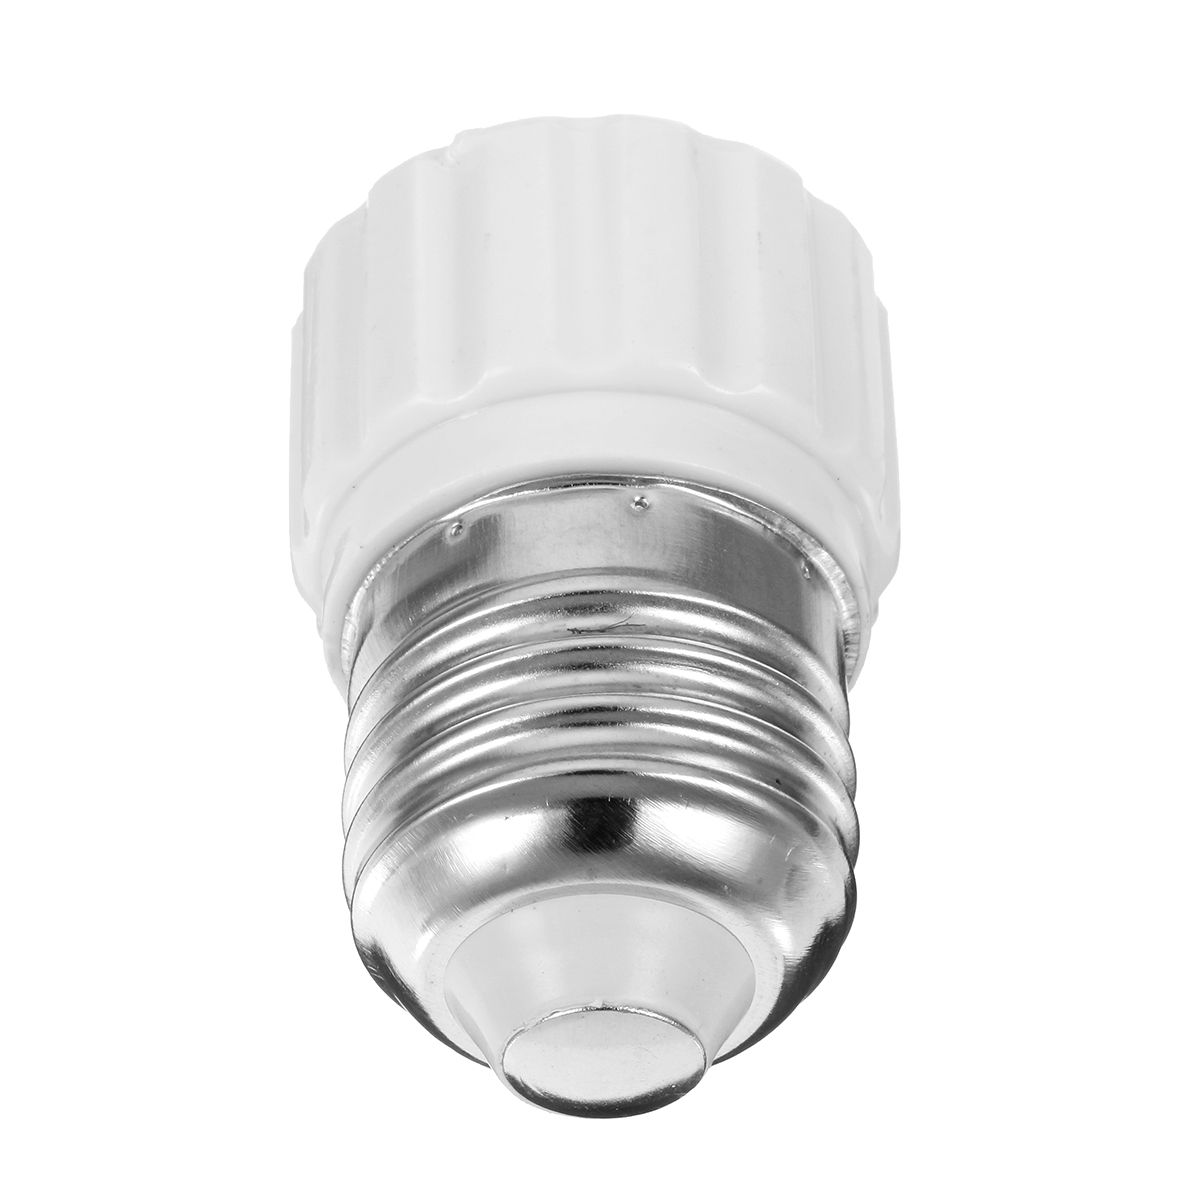 20PCS-E27-to-GU10-Light-Lamp-Bulb-Adapter-Converter-1372914